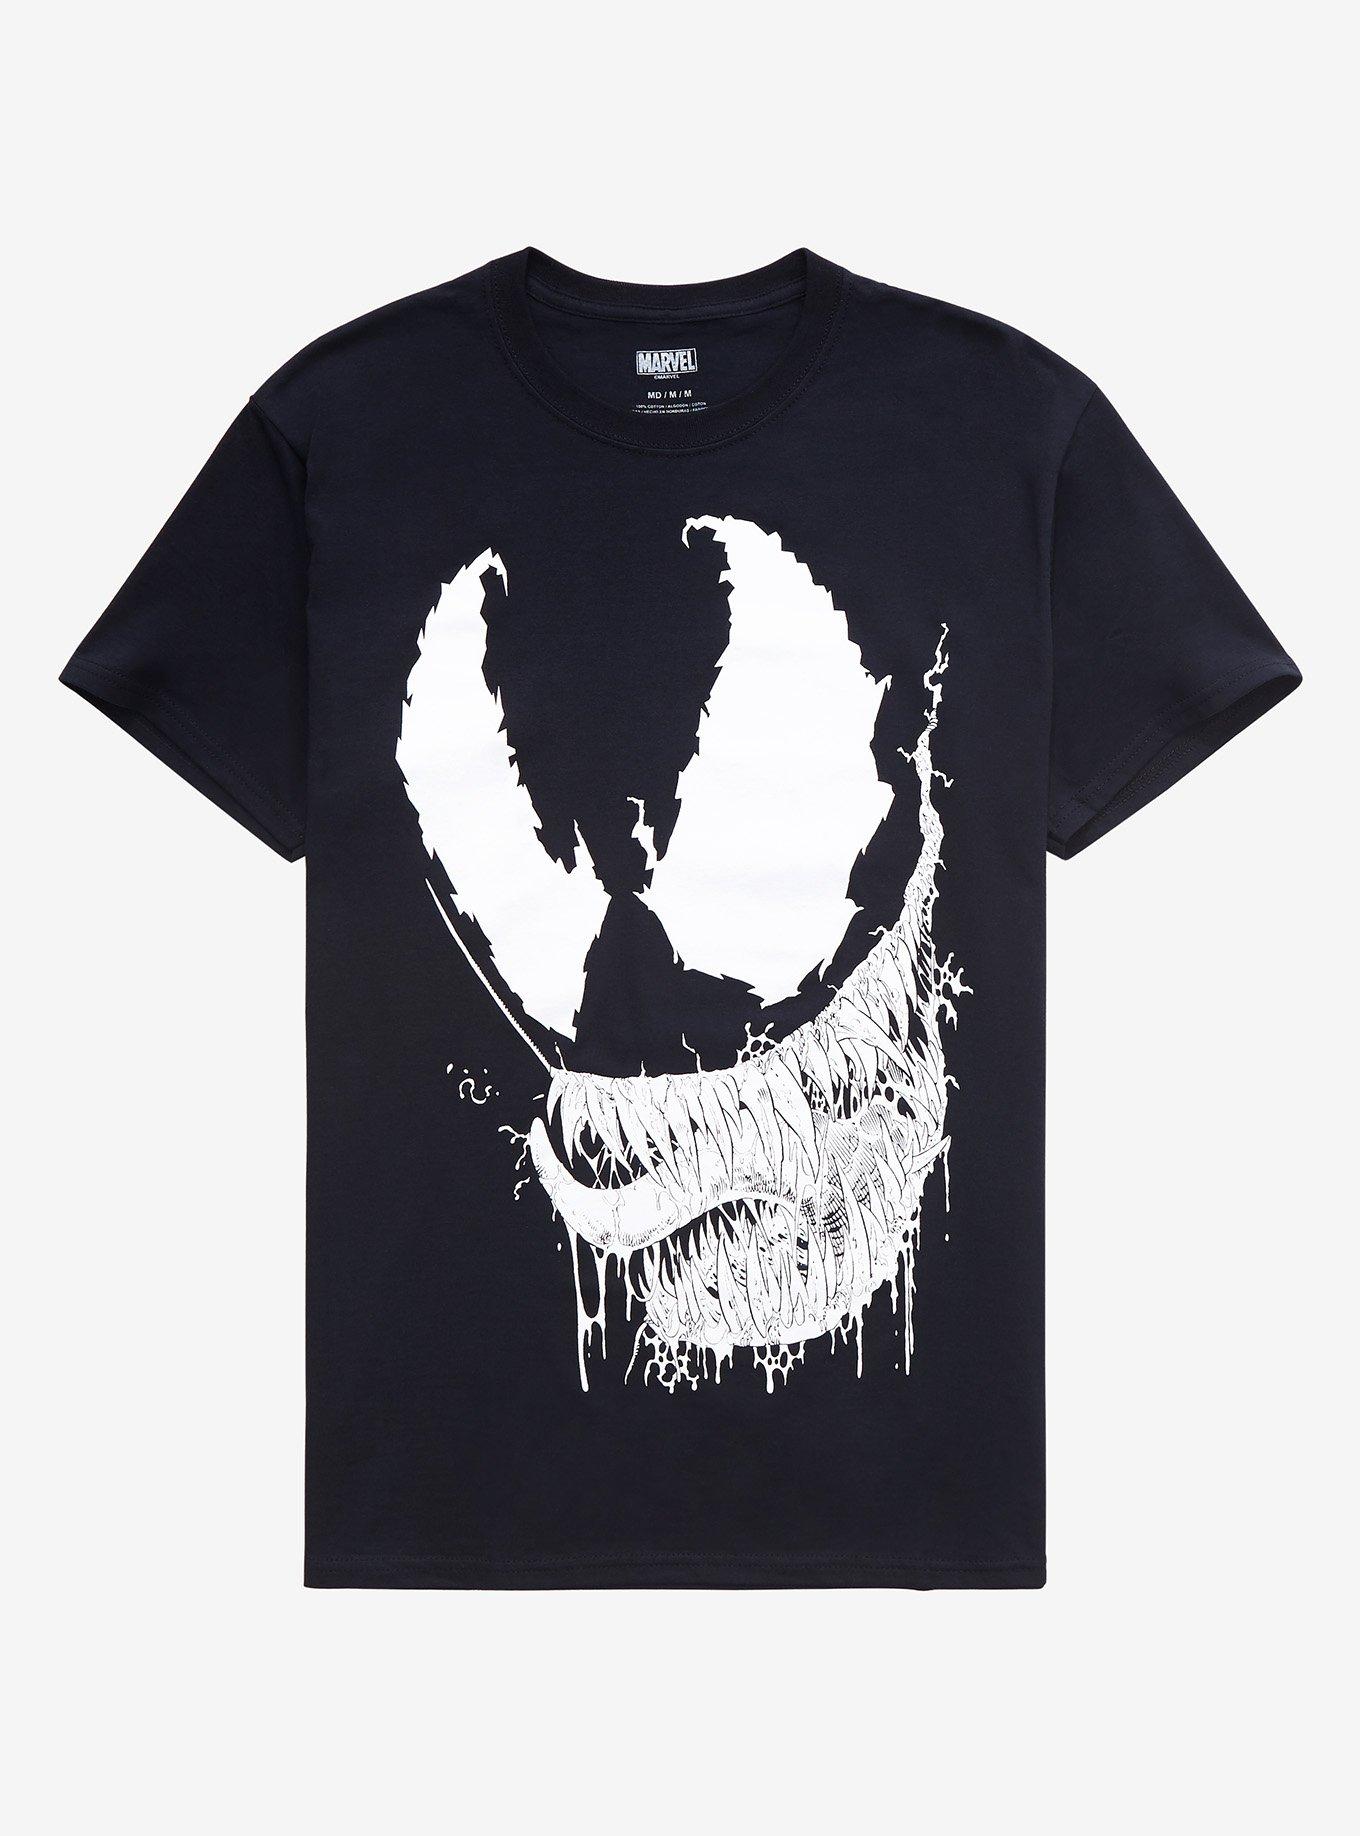 Venom Black And White We Are Venom Face T Shirt Hot Topic